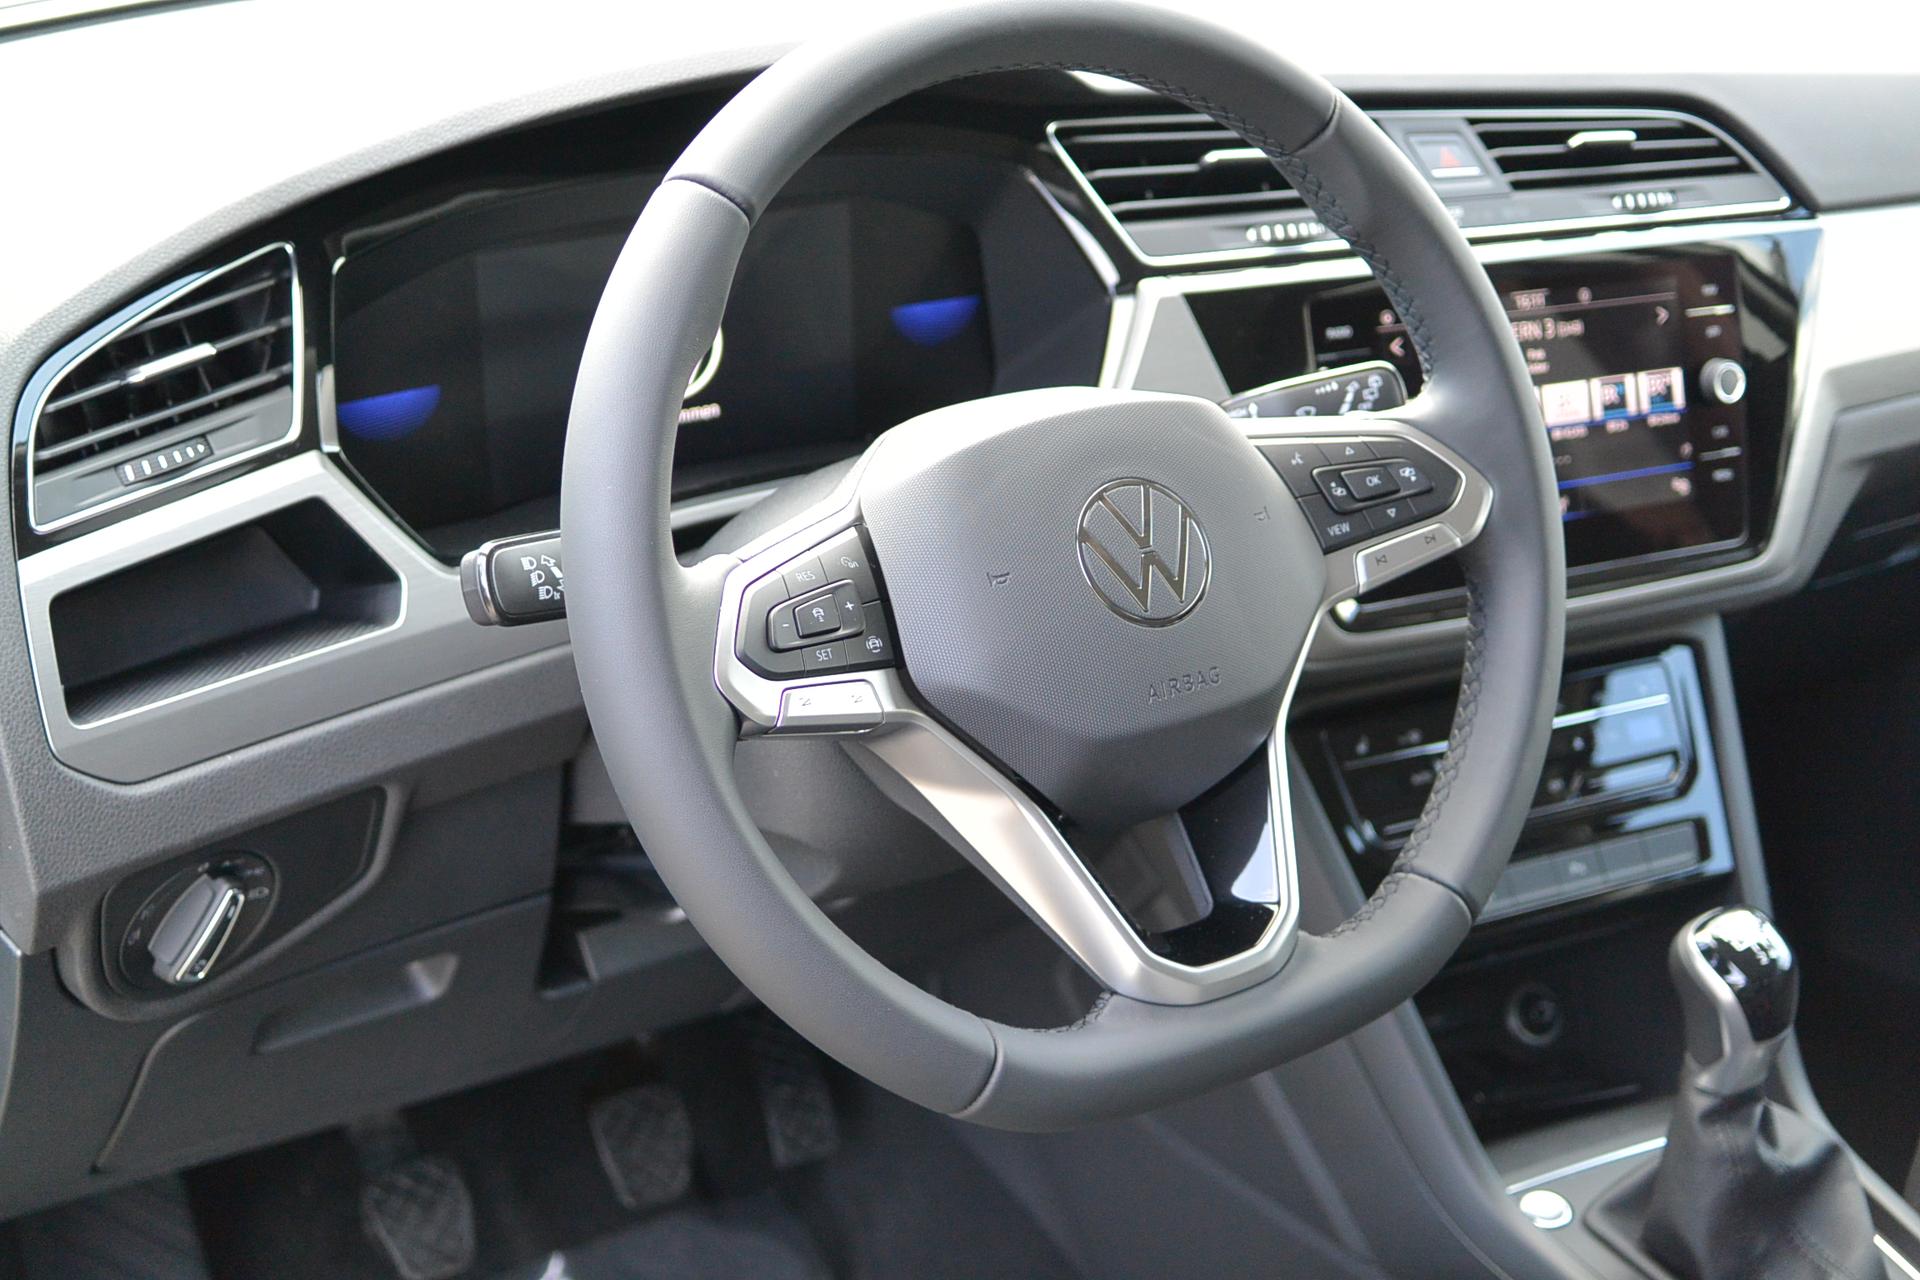 Reimport EU-Neuwagen Volkswagen Touran